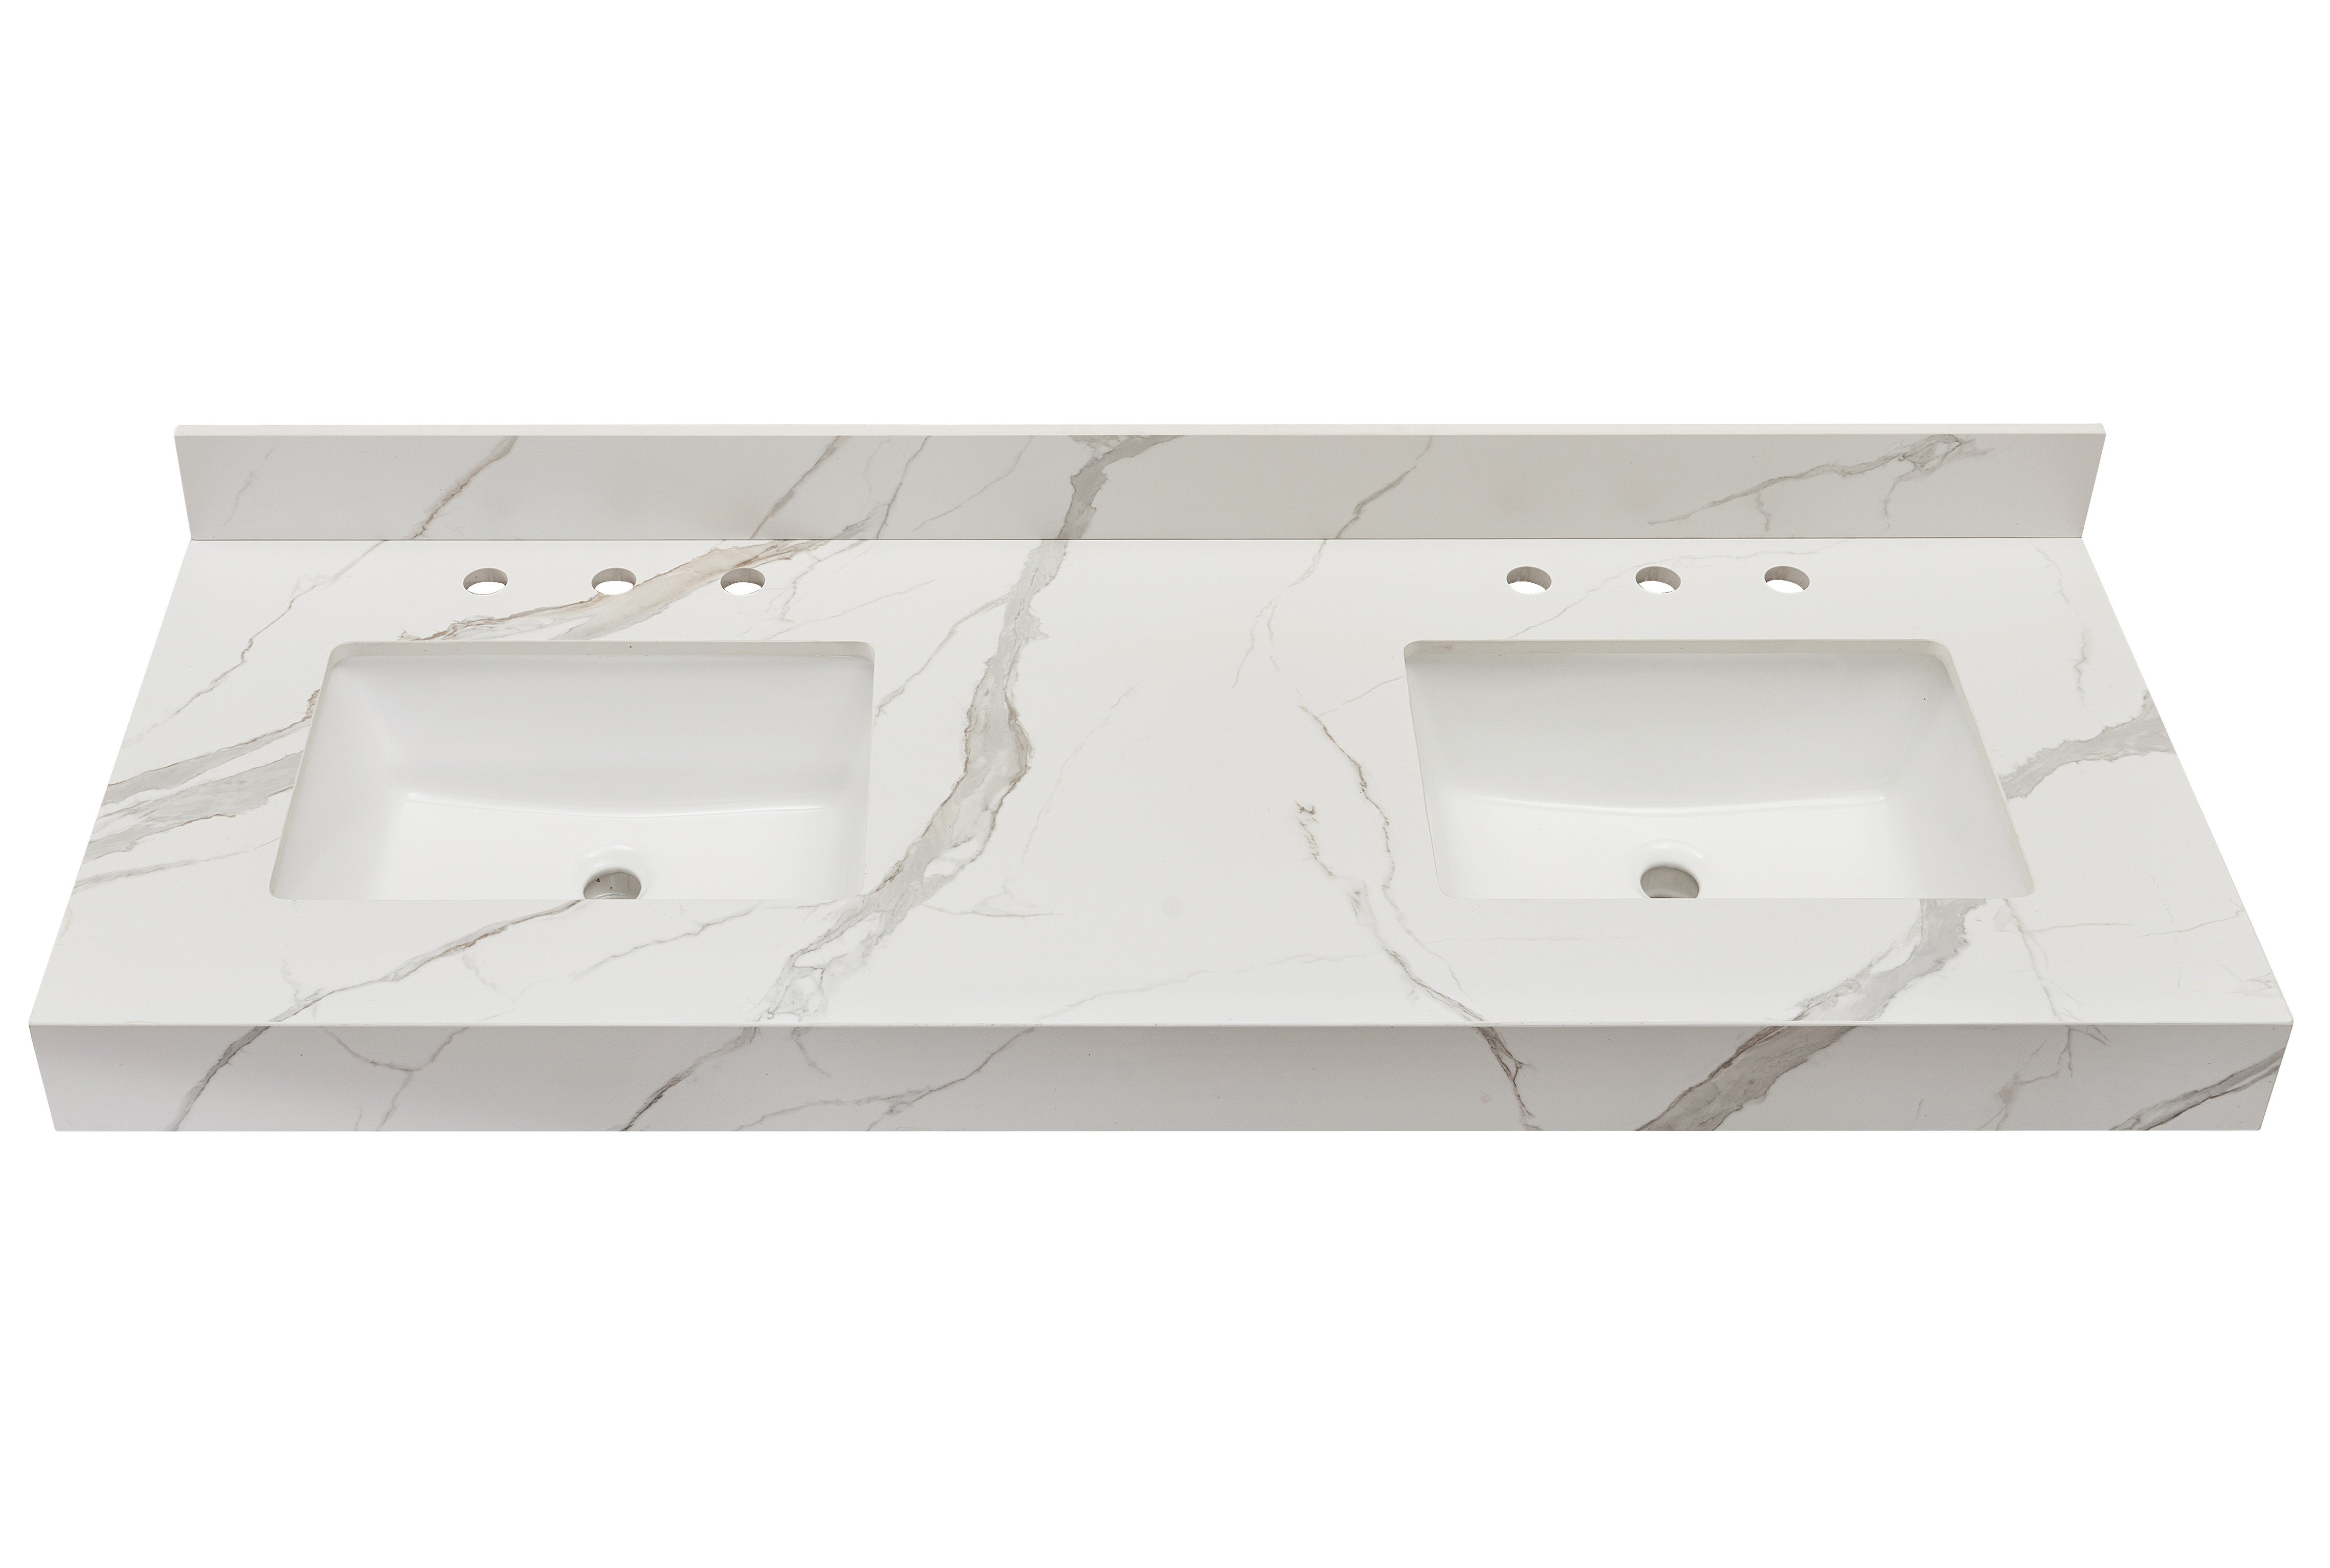 Marseille 60" Double Sink Bathroom Vanity Countertop in Calacatta White Apron